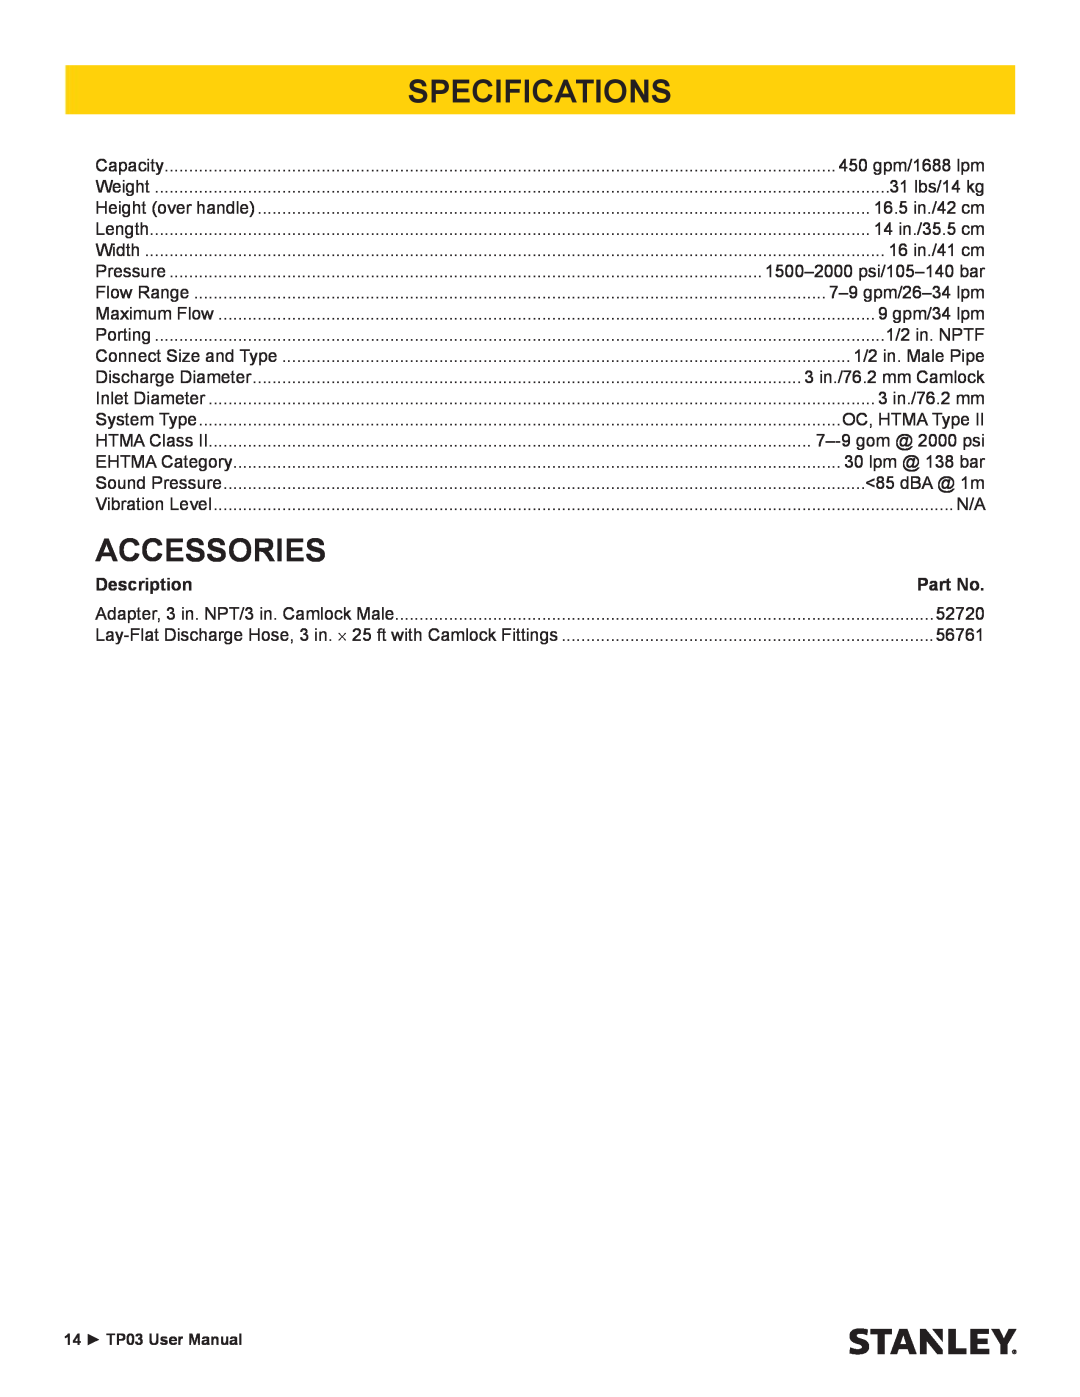 Stanley Black & Decker TP03 user manual Specifications, Accessories, Description 